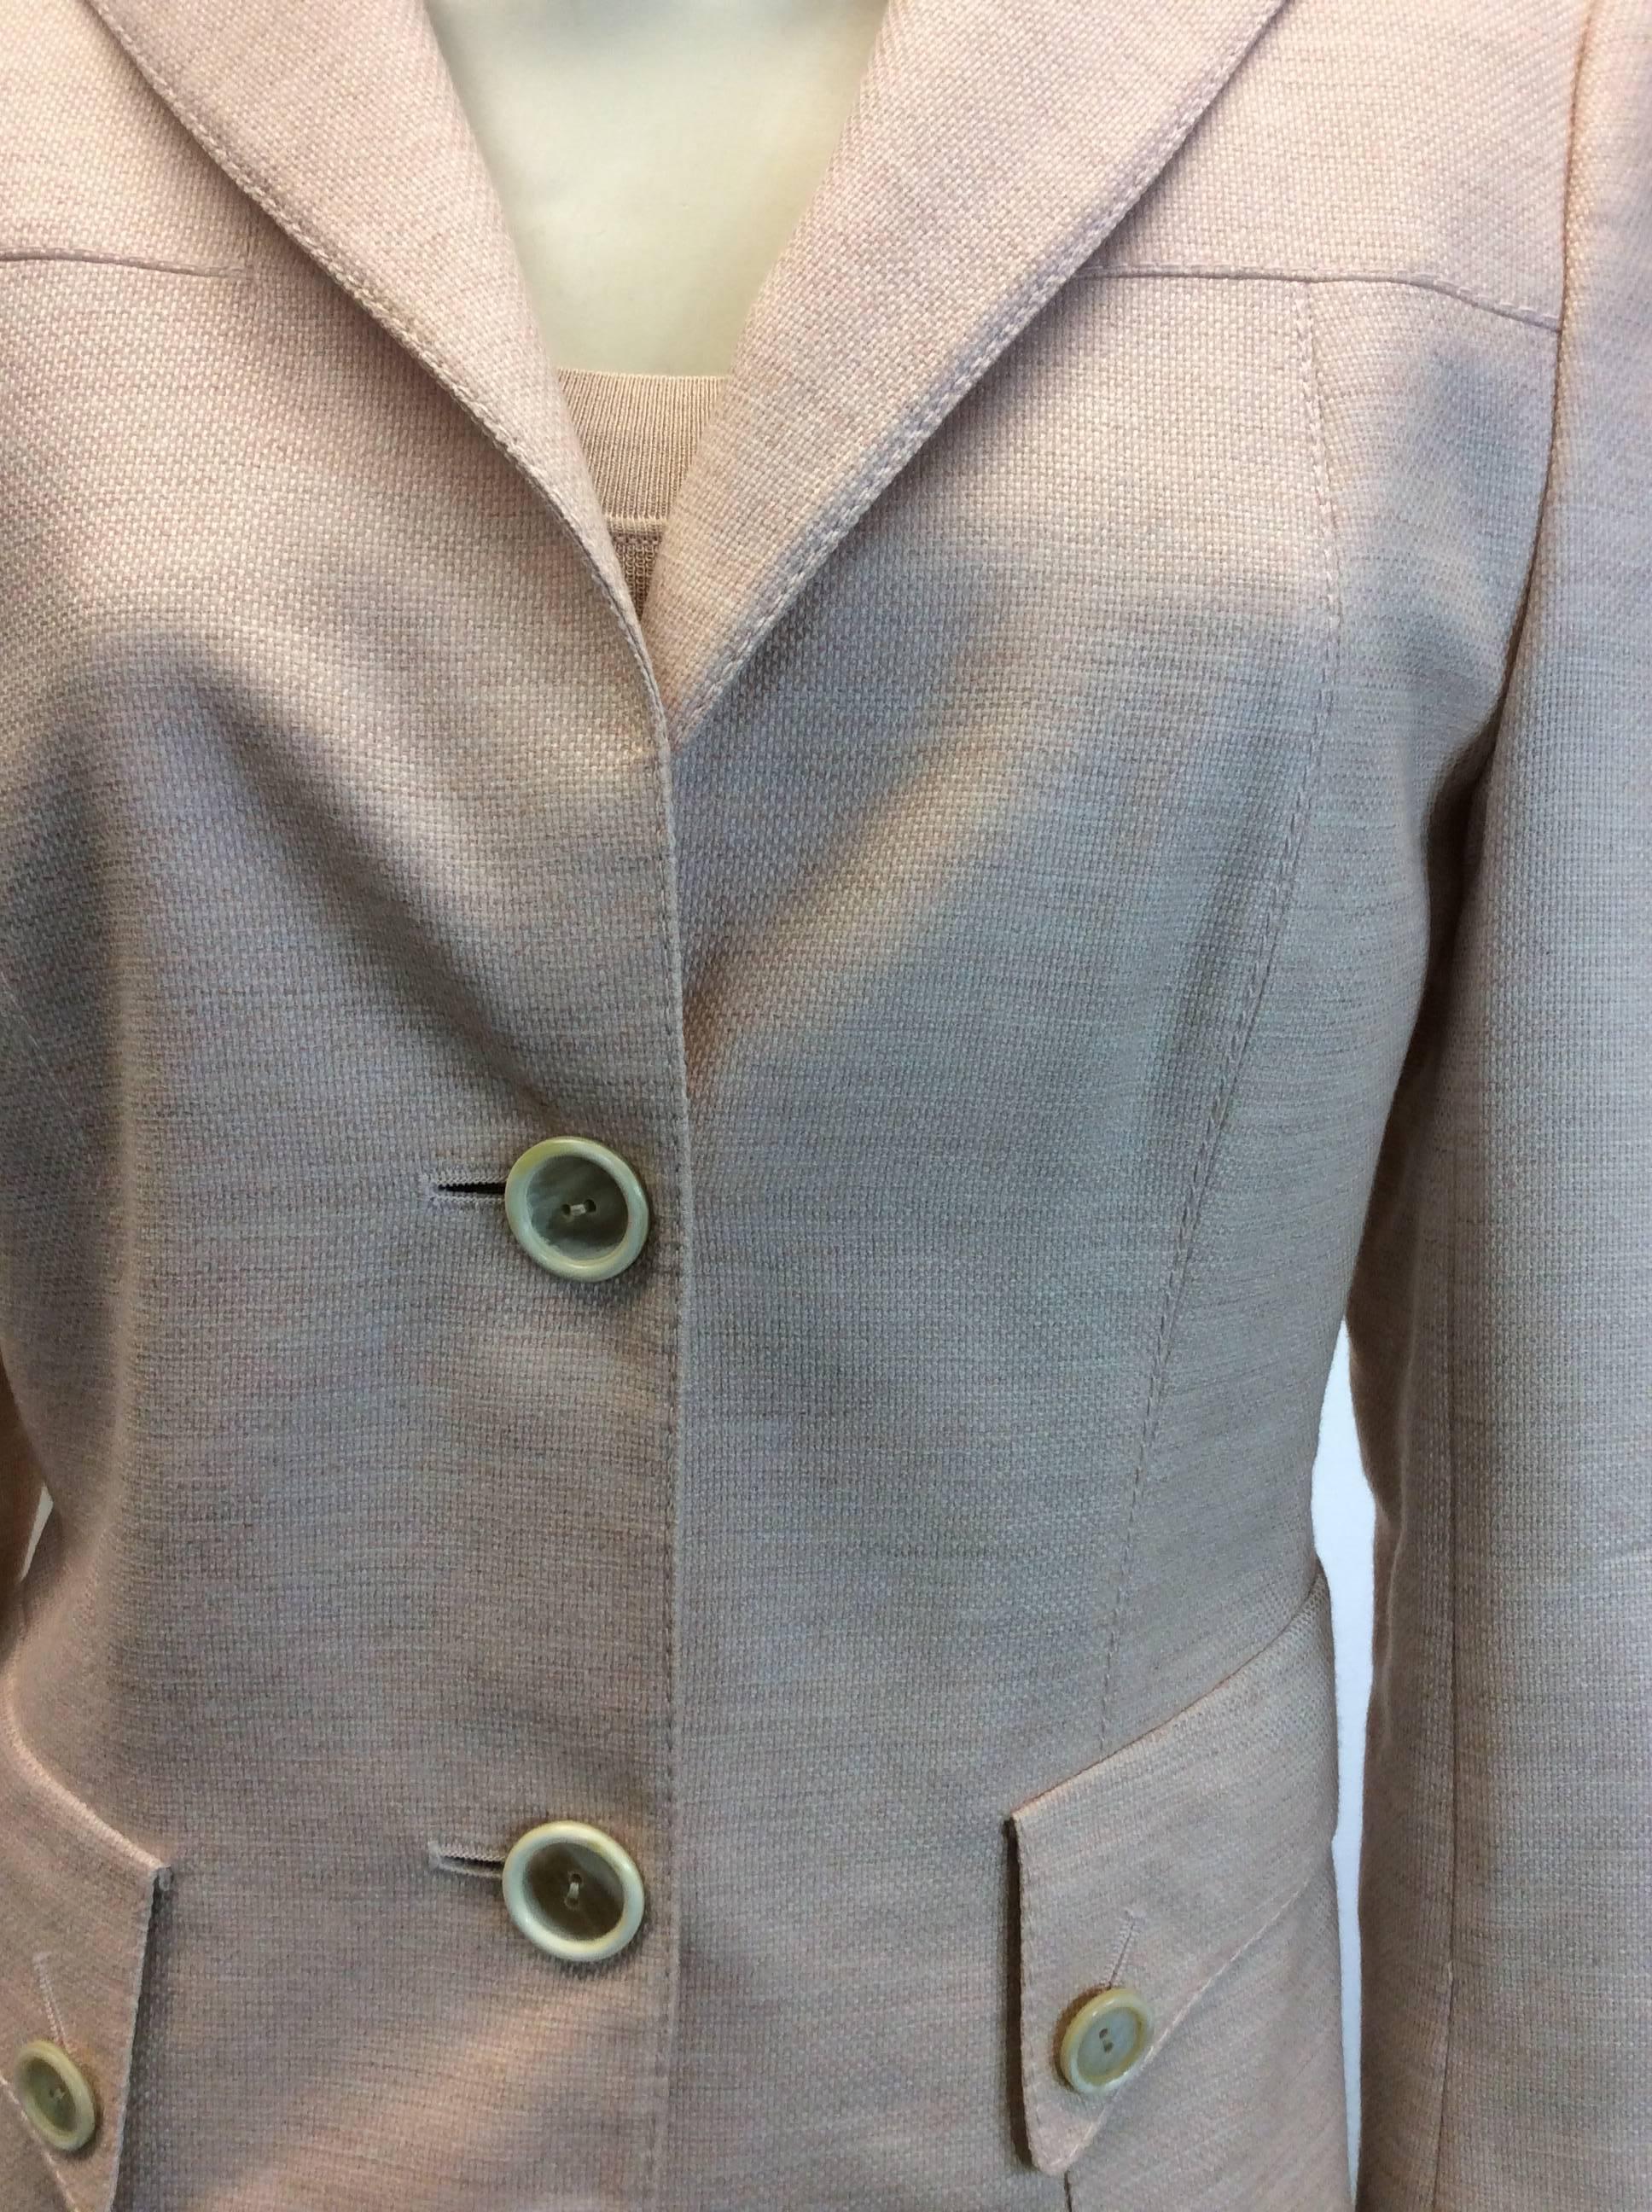 Akris Pink 2 Piece Set
$299
Size 6
2 piece set: silk blouse and blazer
